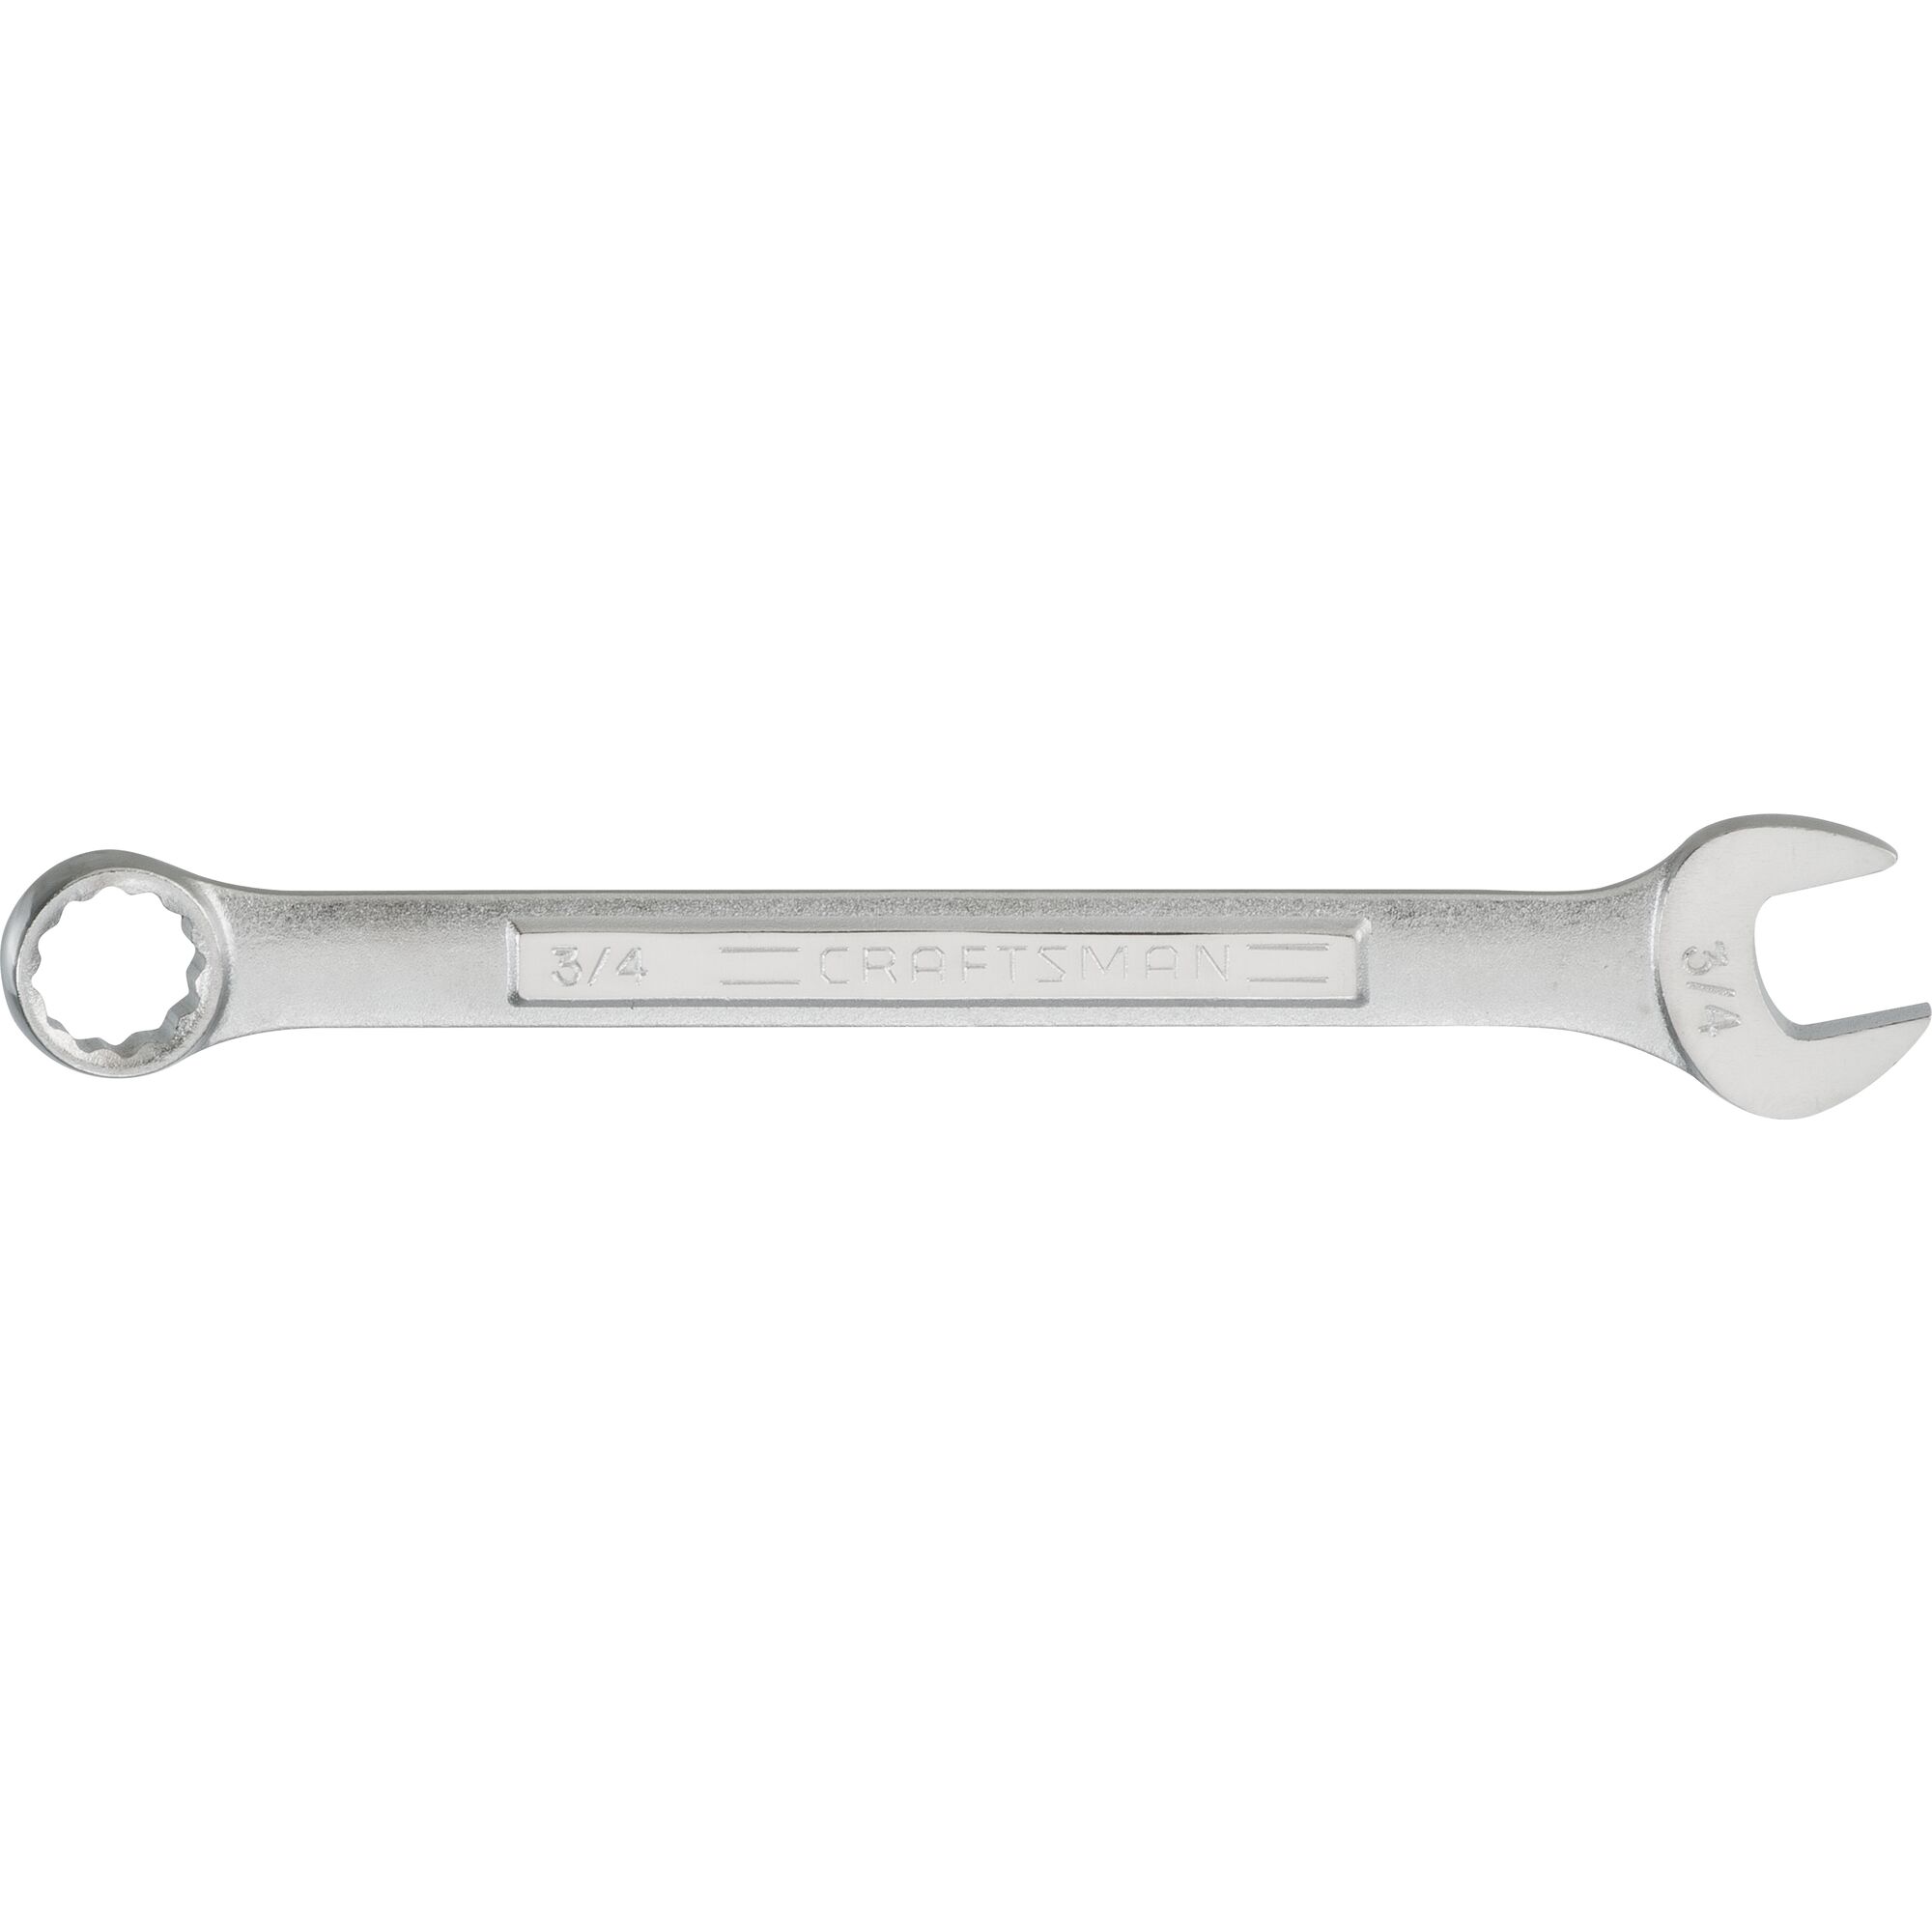 3 quarter inch standard S A E combination wrench.